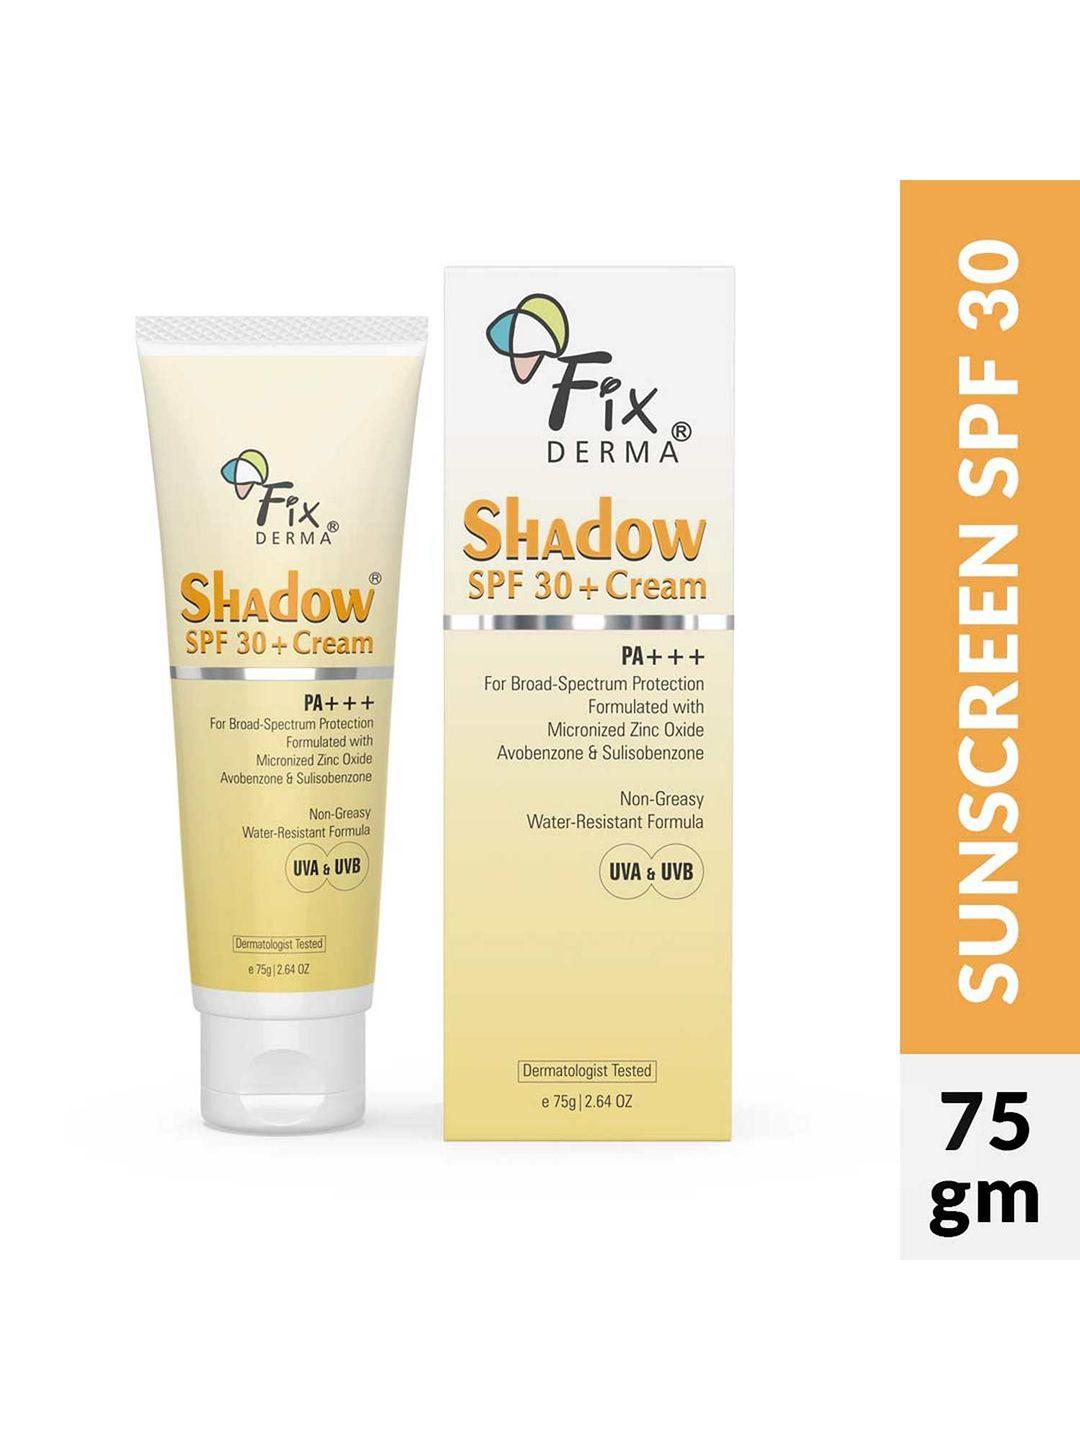 fixderma uva & uvb protection shadow sunscreen spf 30+ cream - 75g